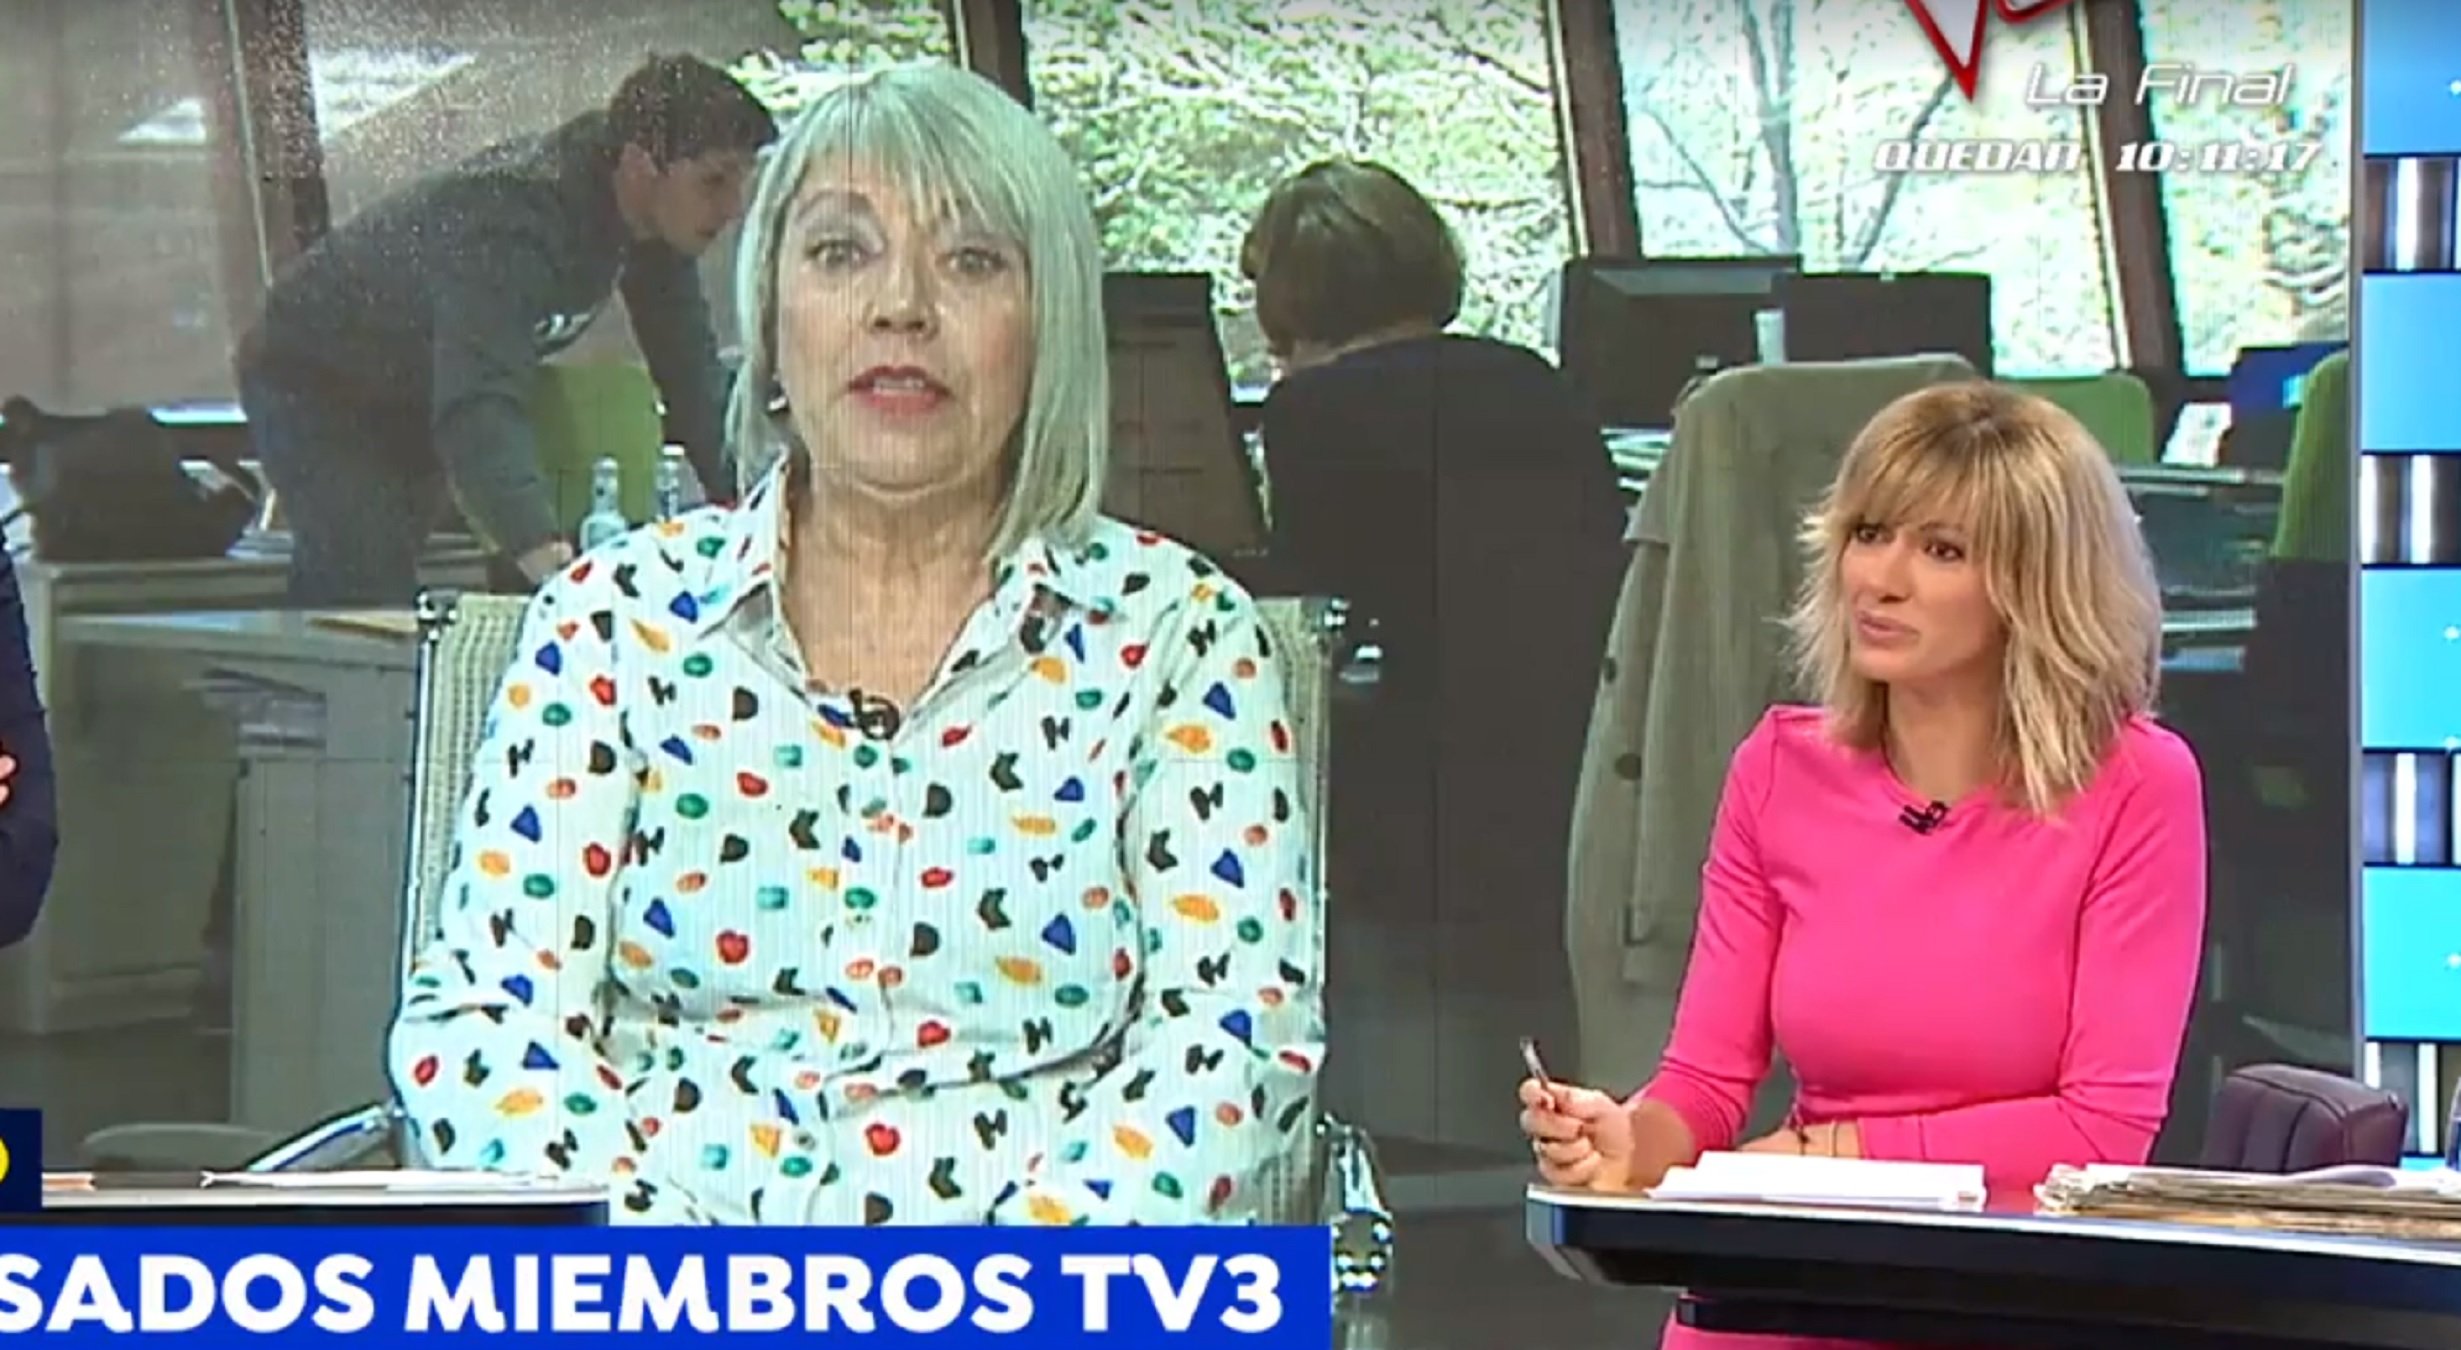 Exempleada de TV3: "TV3 va contra 5 millones que odiamos al independentismo"